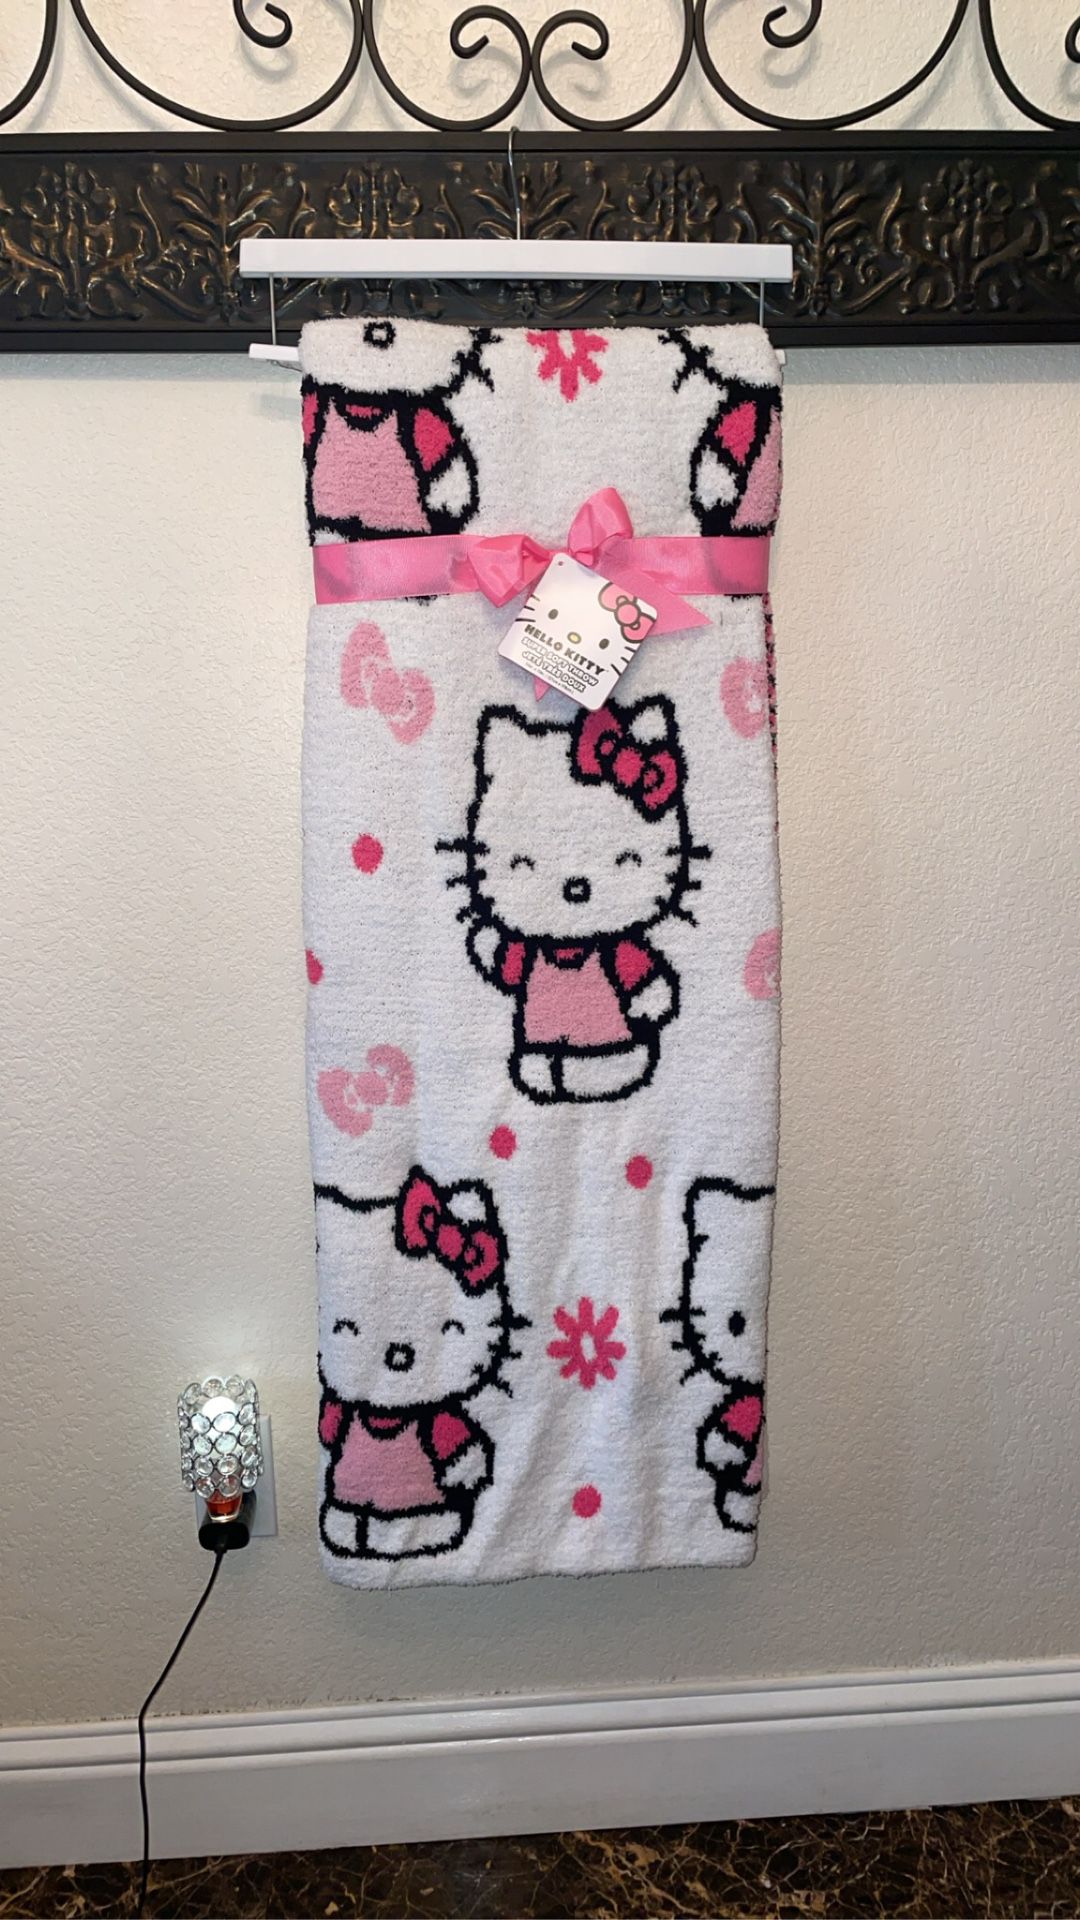 Hello Kitty Blanket New